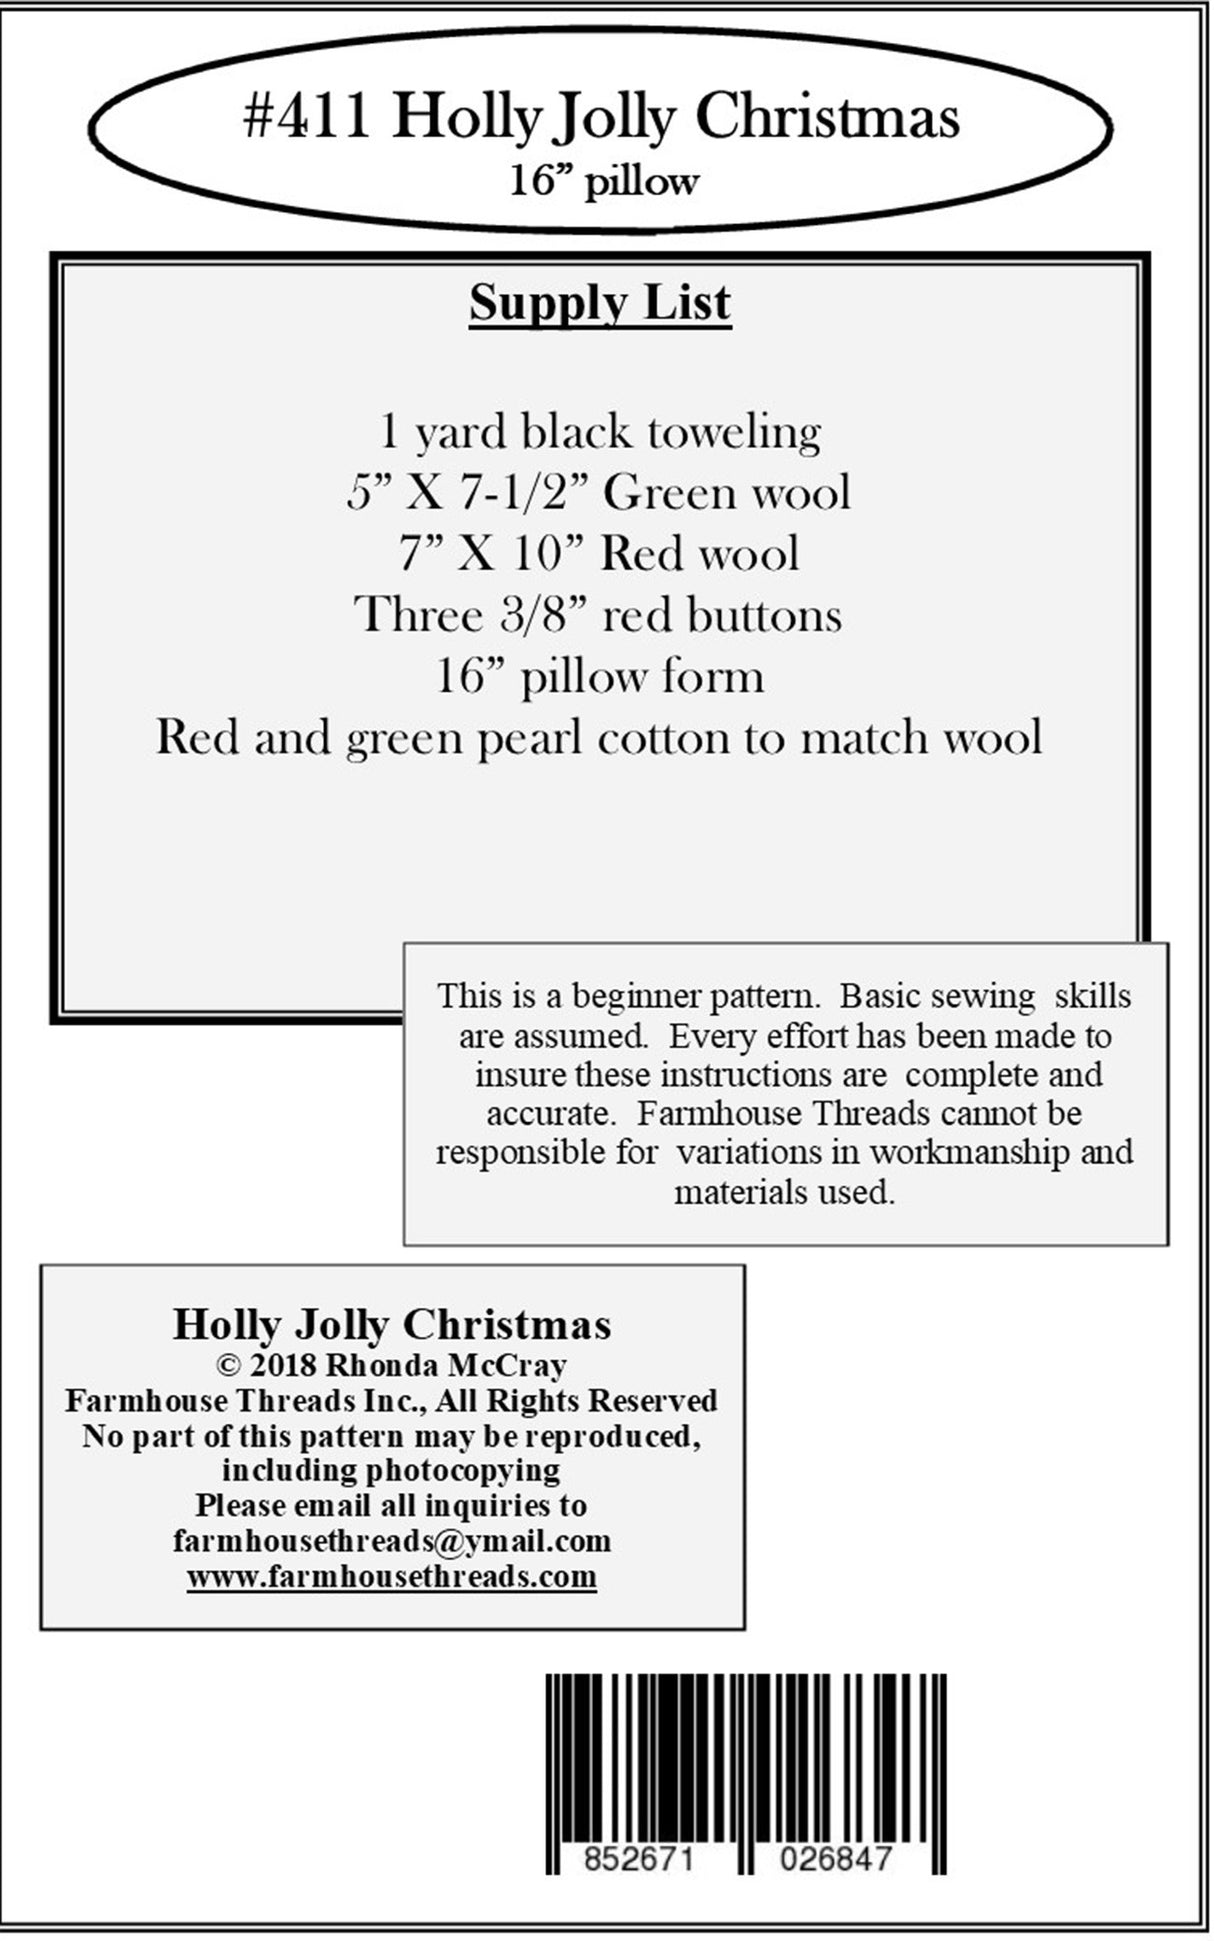 Holly Jolly Christmas Pillow